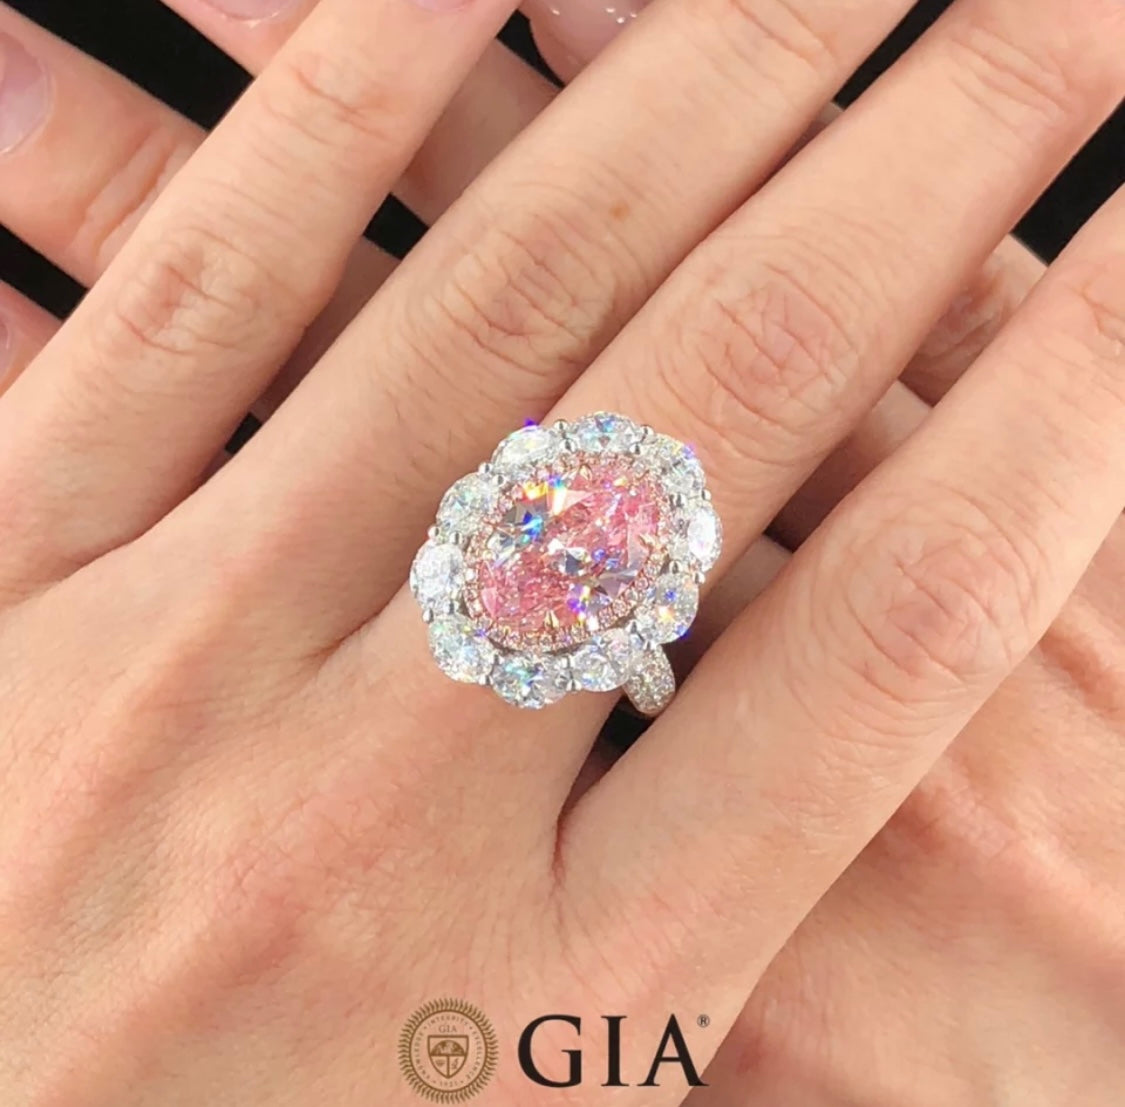 12 Carat Argyle Natural Fancy Vivid Pink Brilliant Oval Cut Diamond Ring